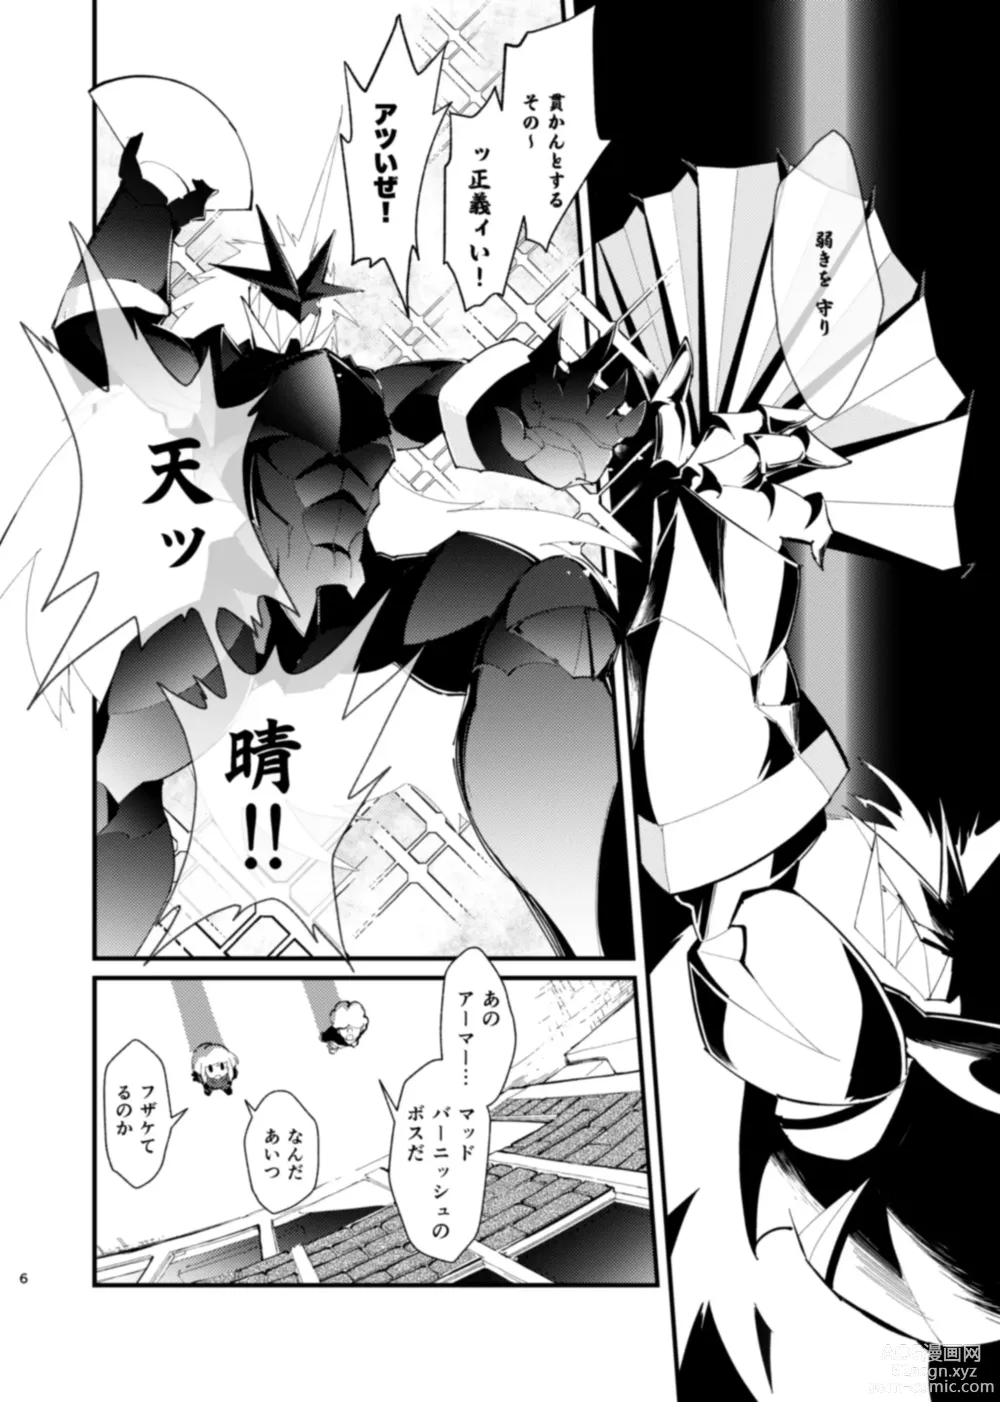 Page 6 of doujinshi NetoLio